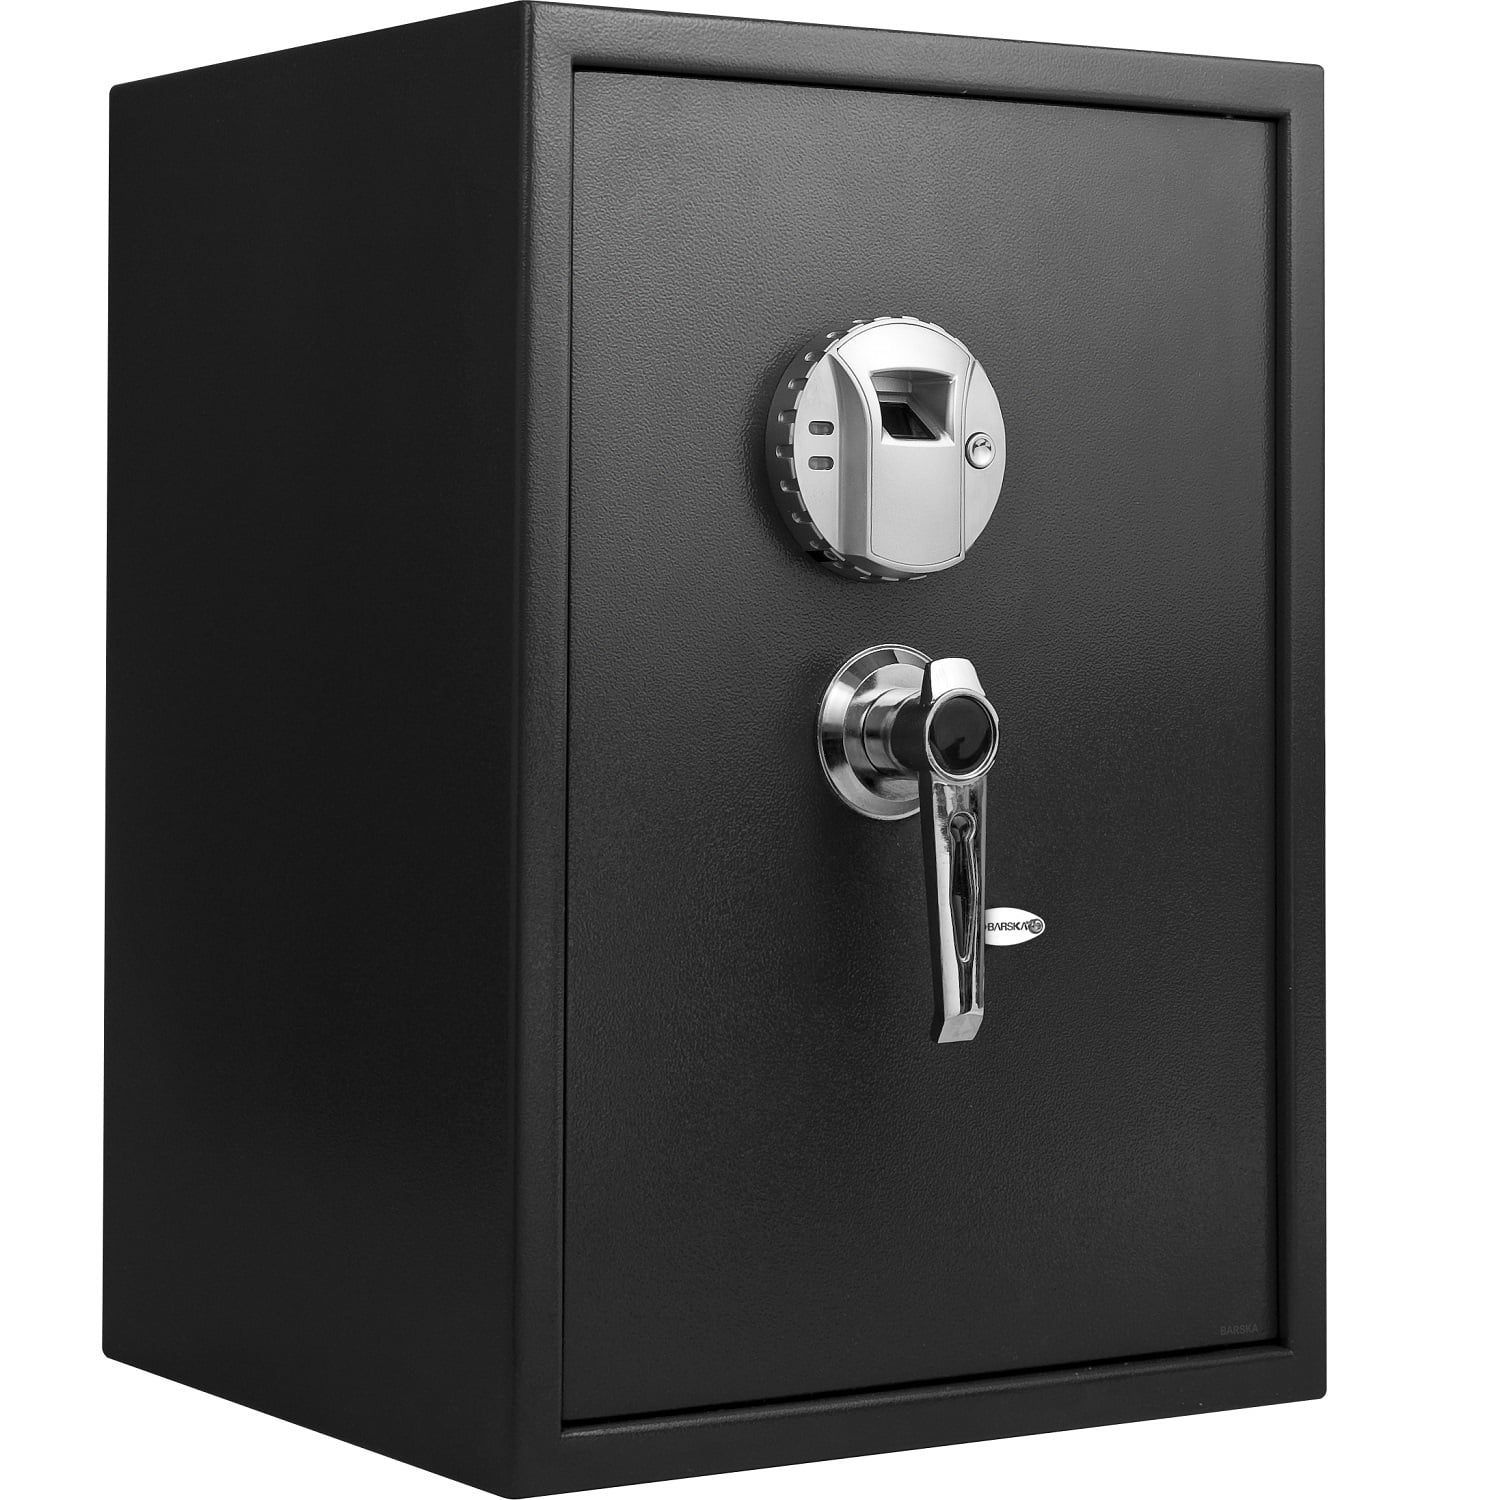 Barska Biometric Wall Hidden Safe Fingerprint Lock Security Box AX12038 